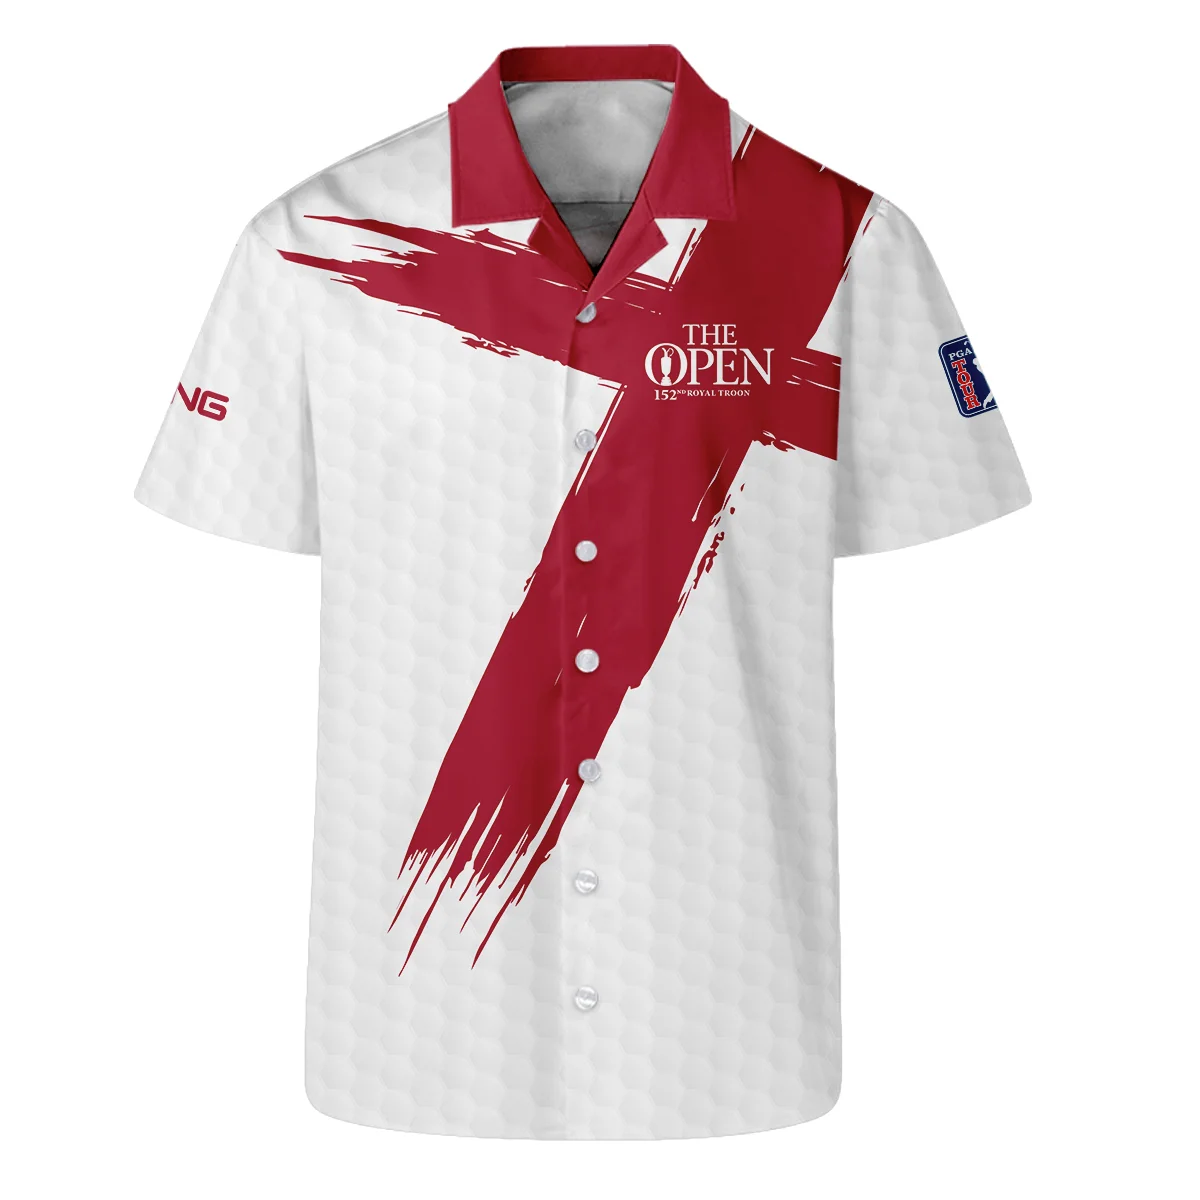 Ping 152nd The Open Championship Golf Sport Zipper Hoodie Shirt Red White Golf Pattern All Over Print Zipper Hoodie Shirt